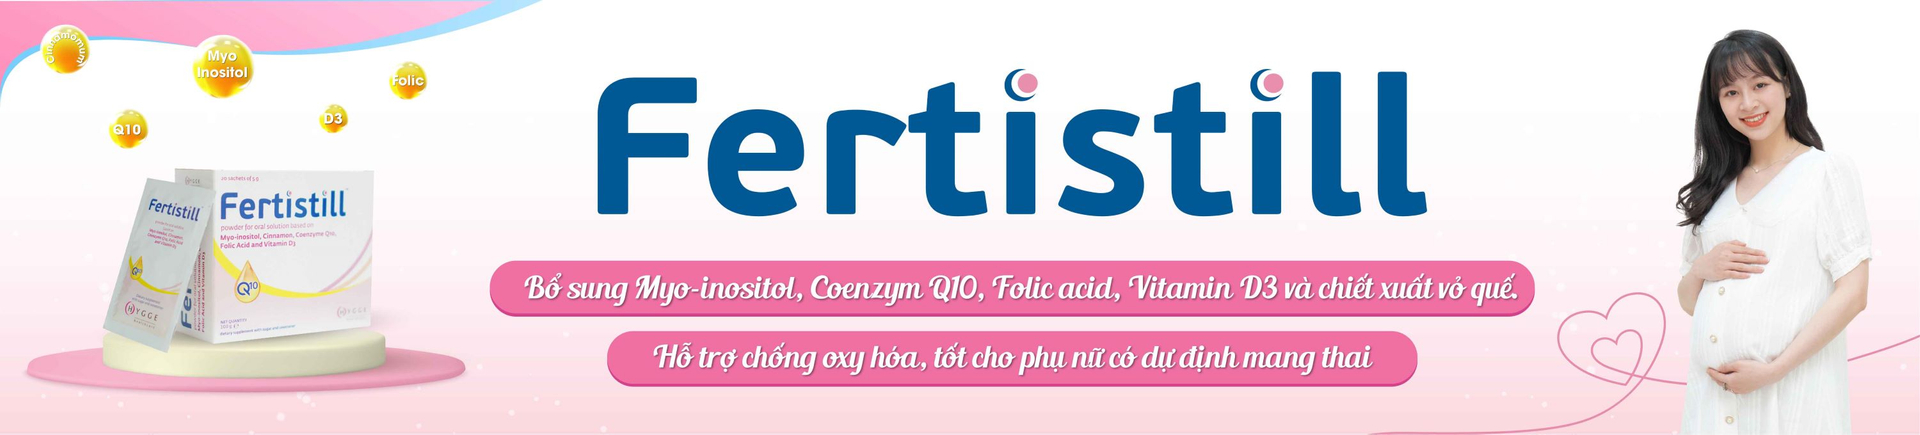 fertistill hỗ trợ sinh sản ở nữ giới